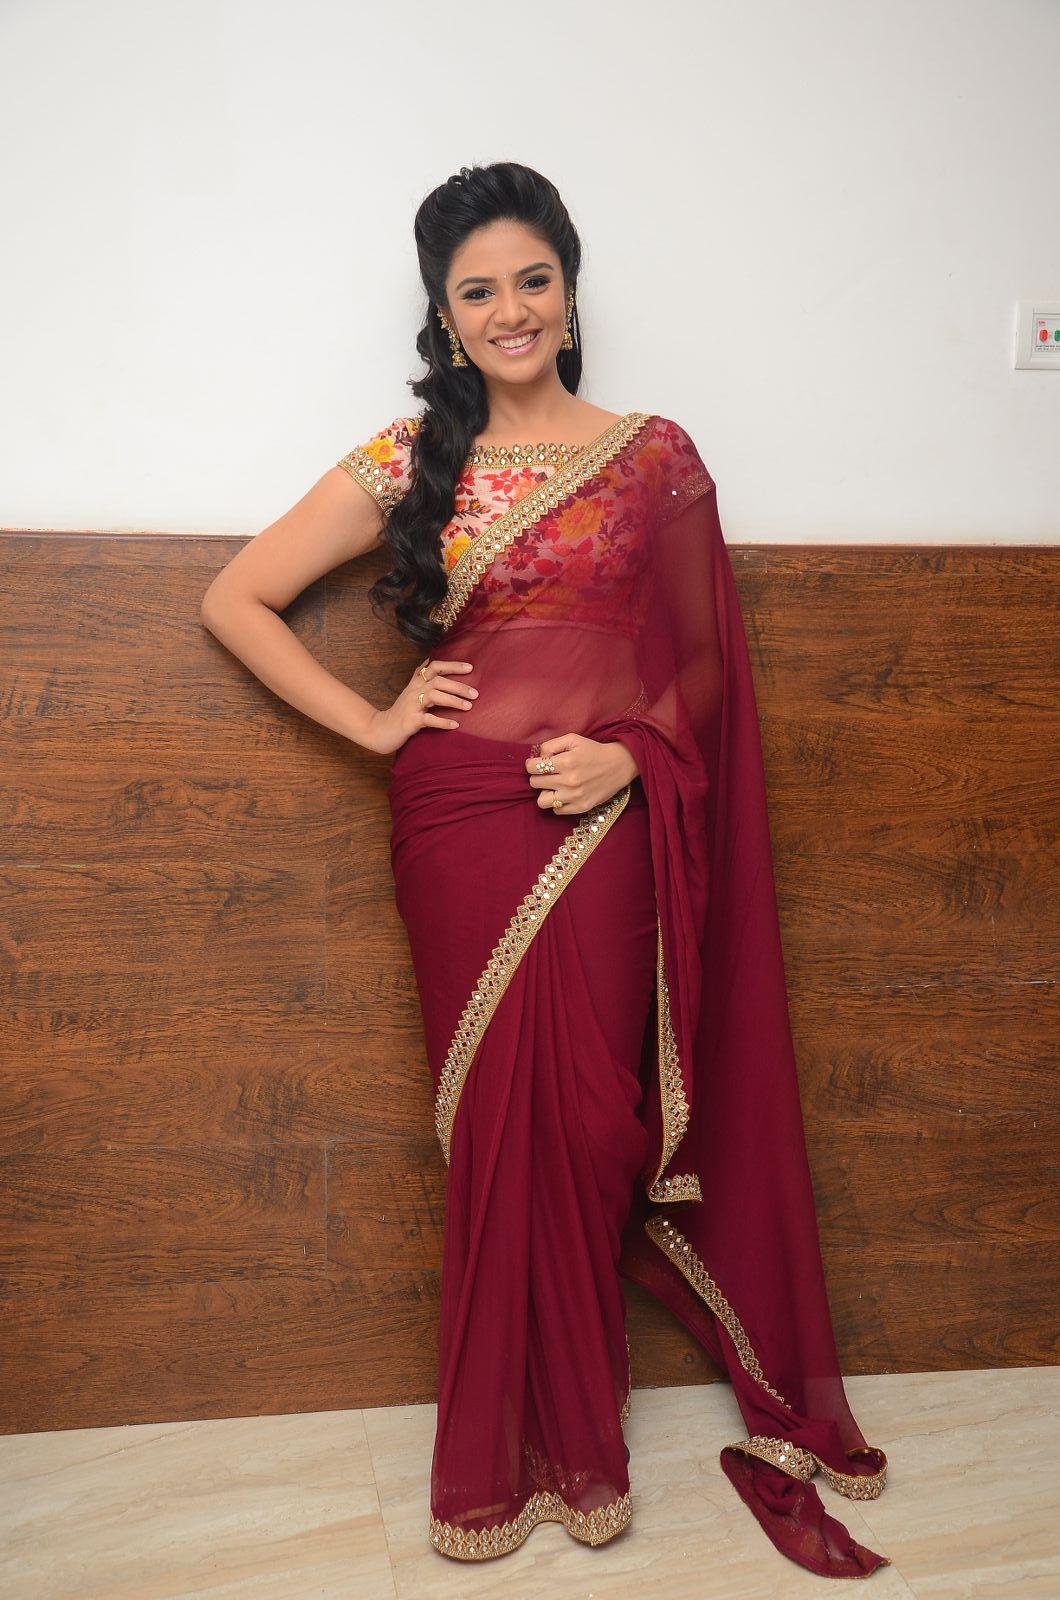 Srimukhi Pretty Saree Stills